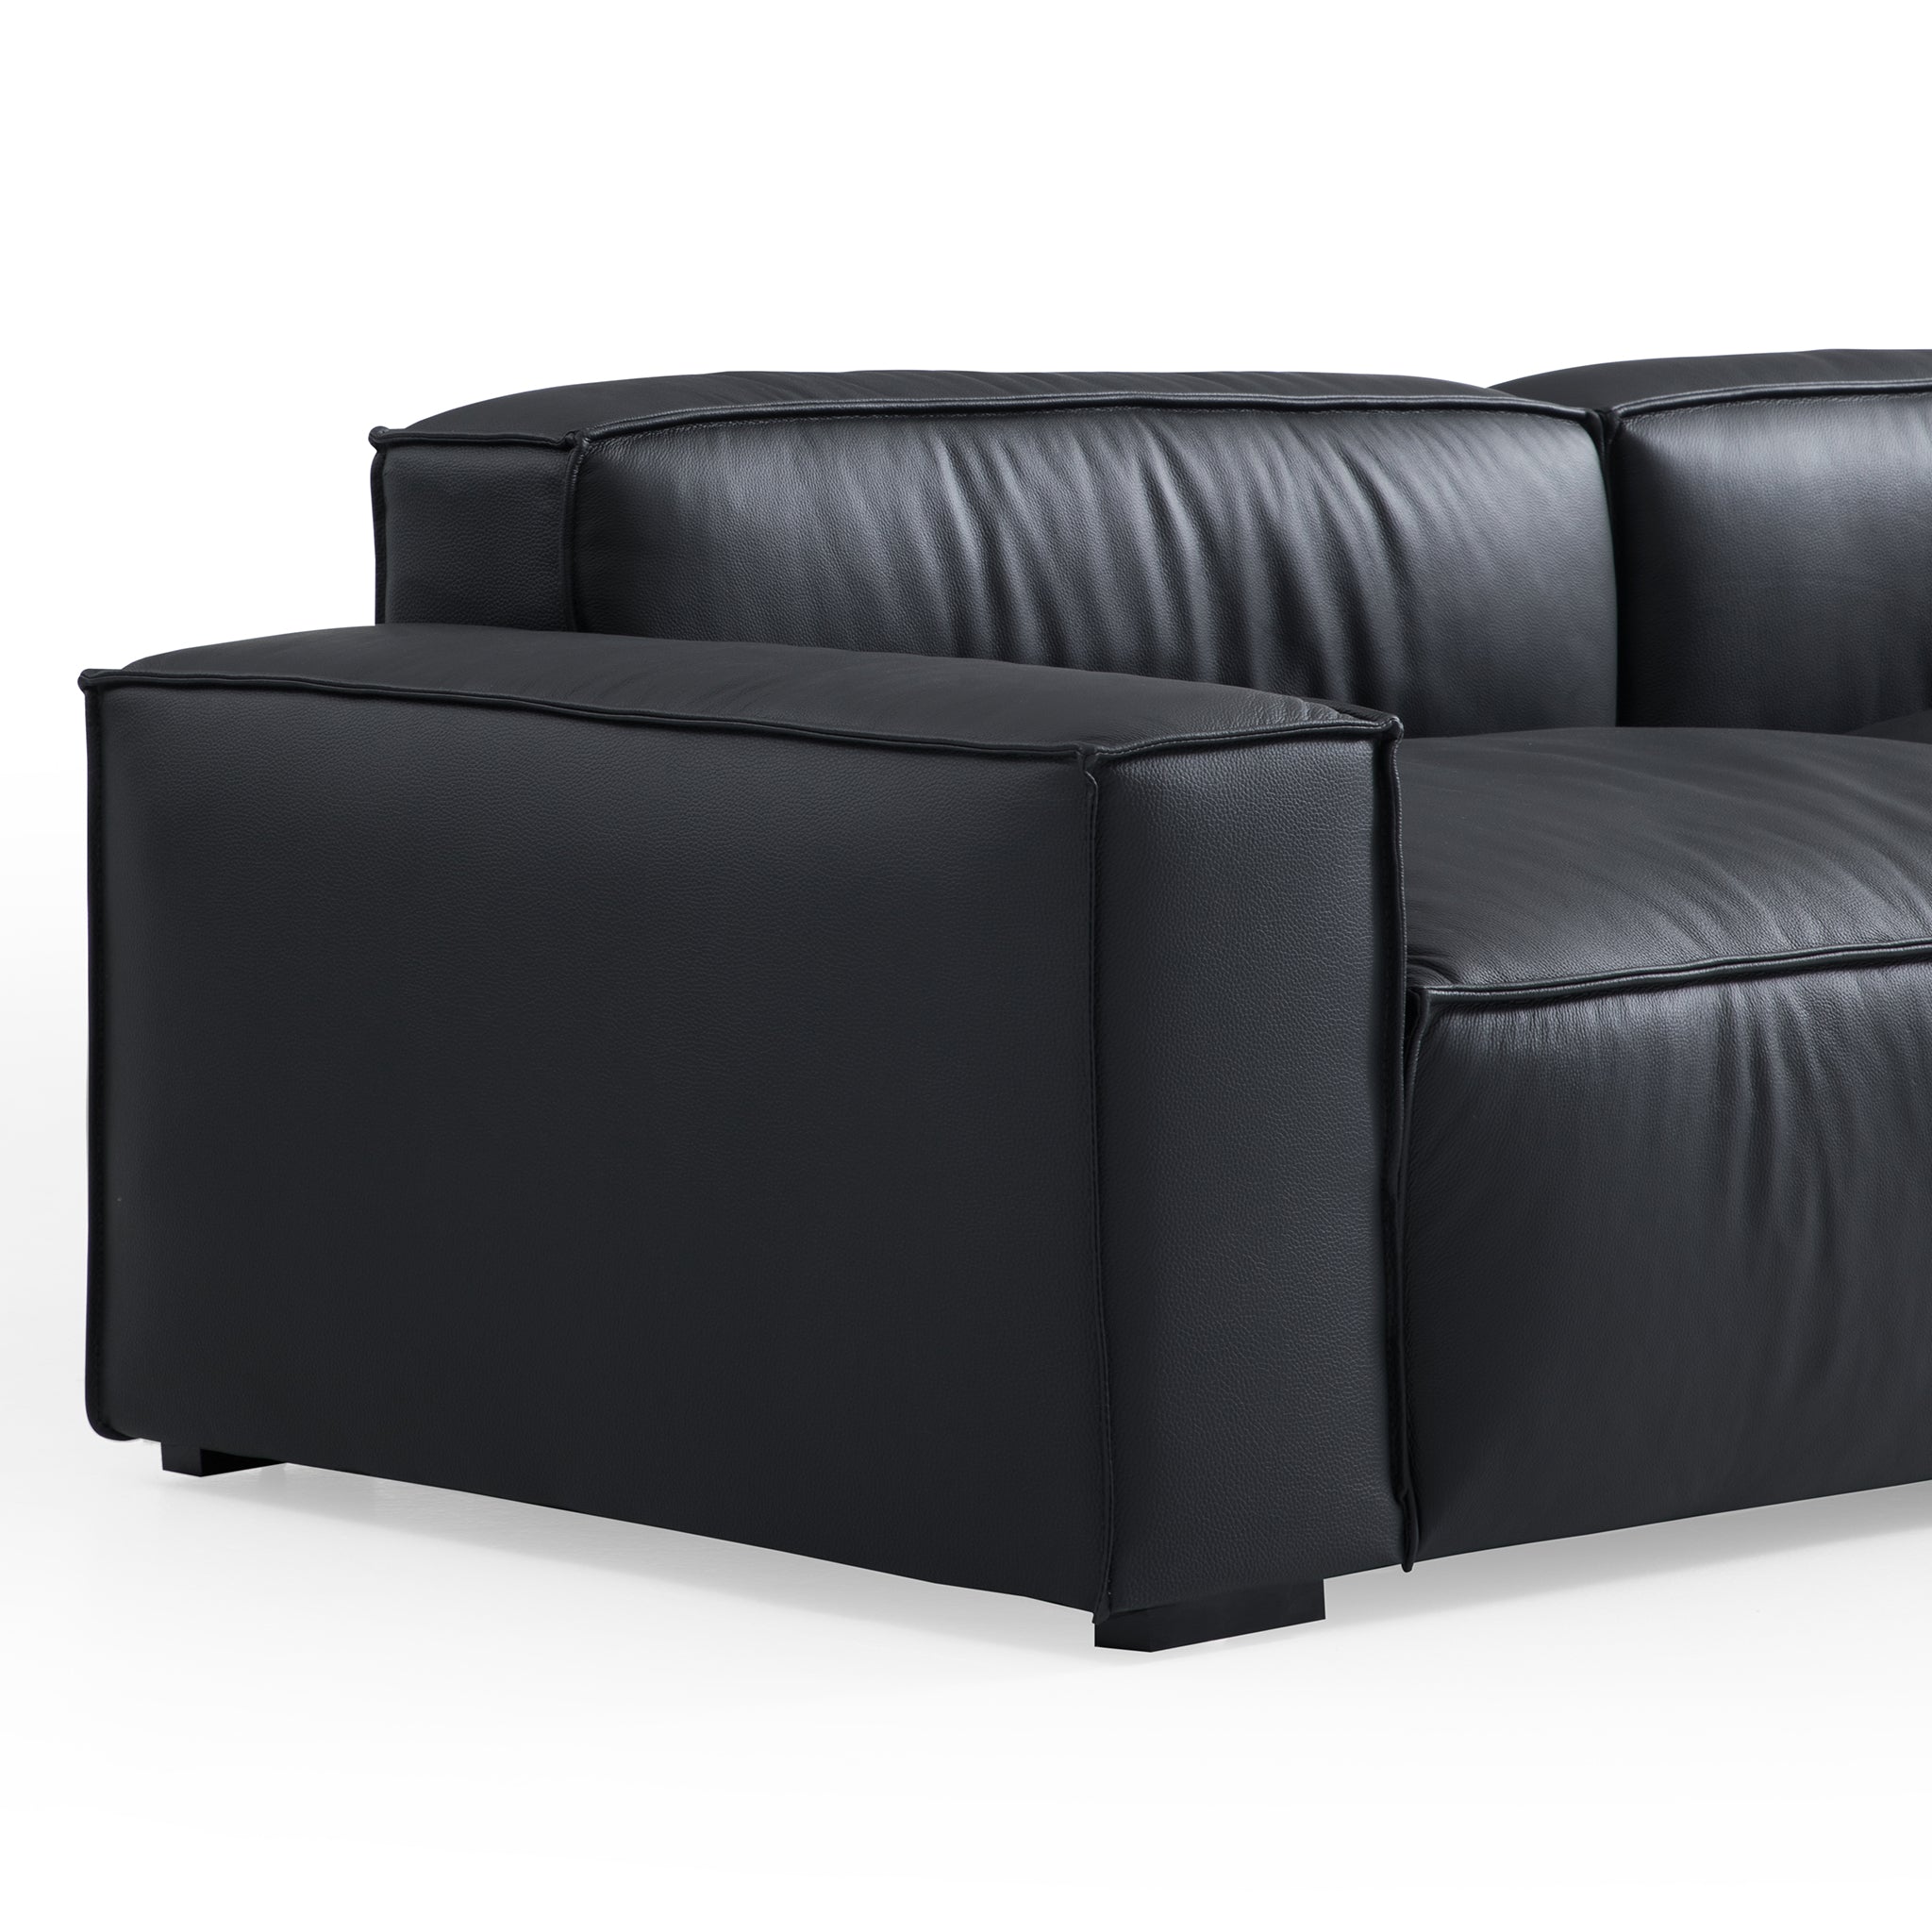 Luxury Minimalist Black Leather Sectional Set